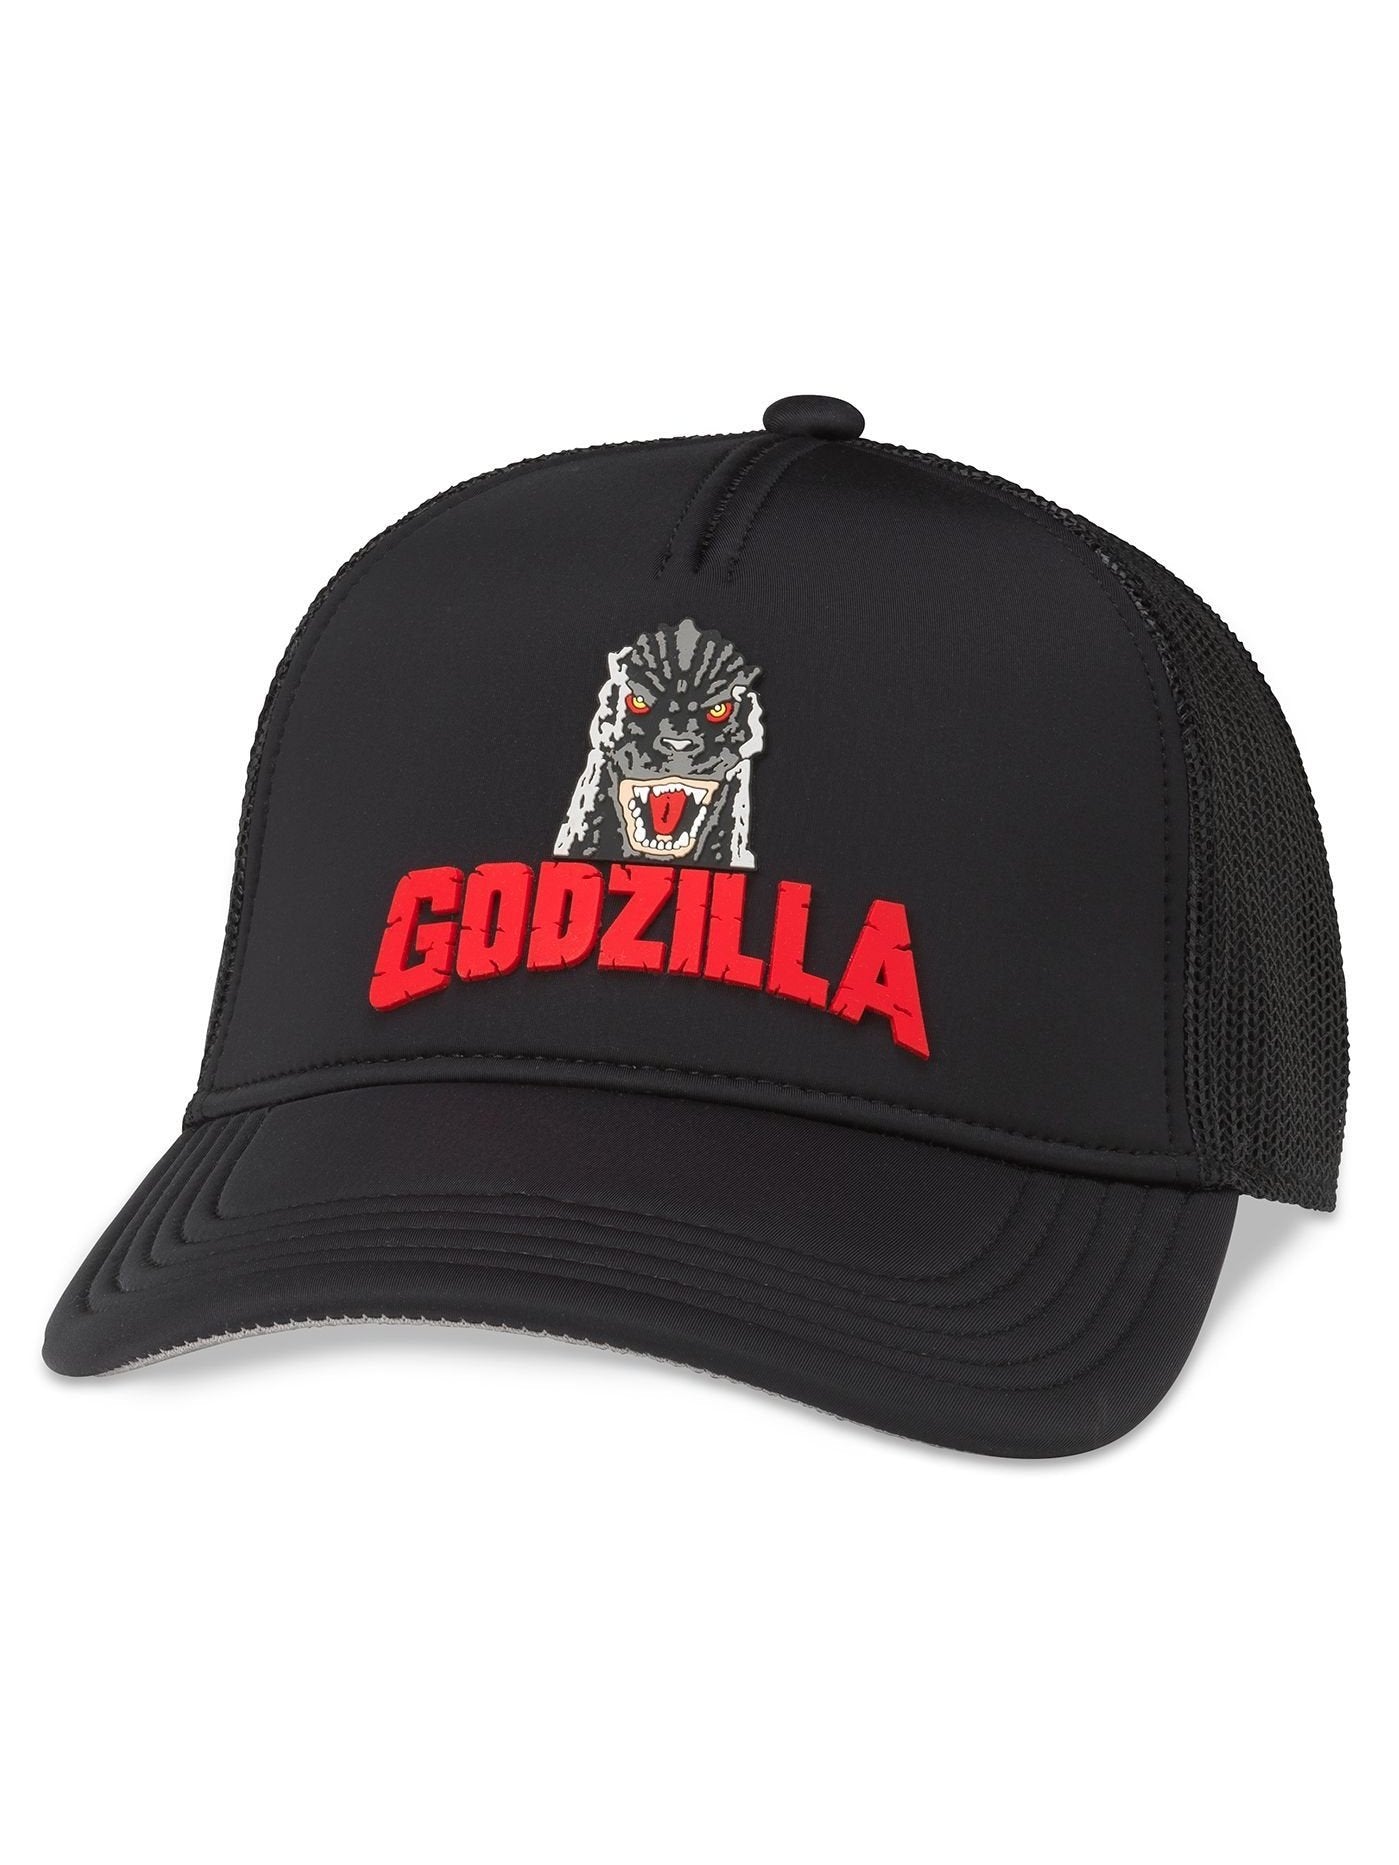 American Needle Godzilla Riptide Valin Cap Black 44890A-GODZILLA.